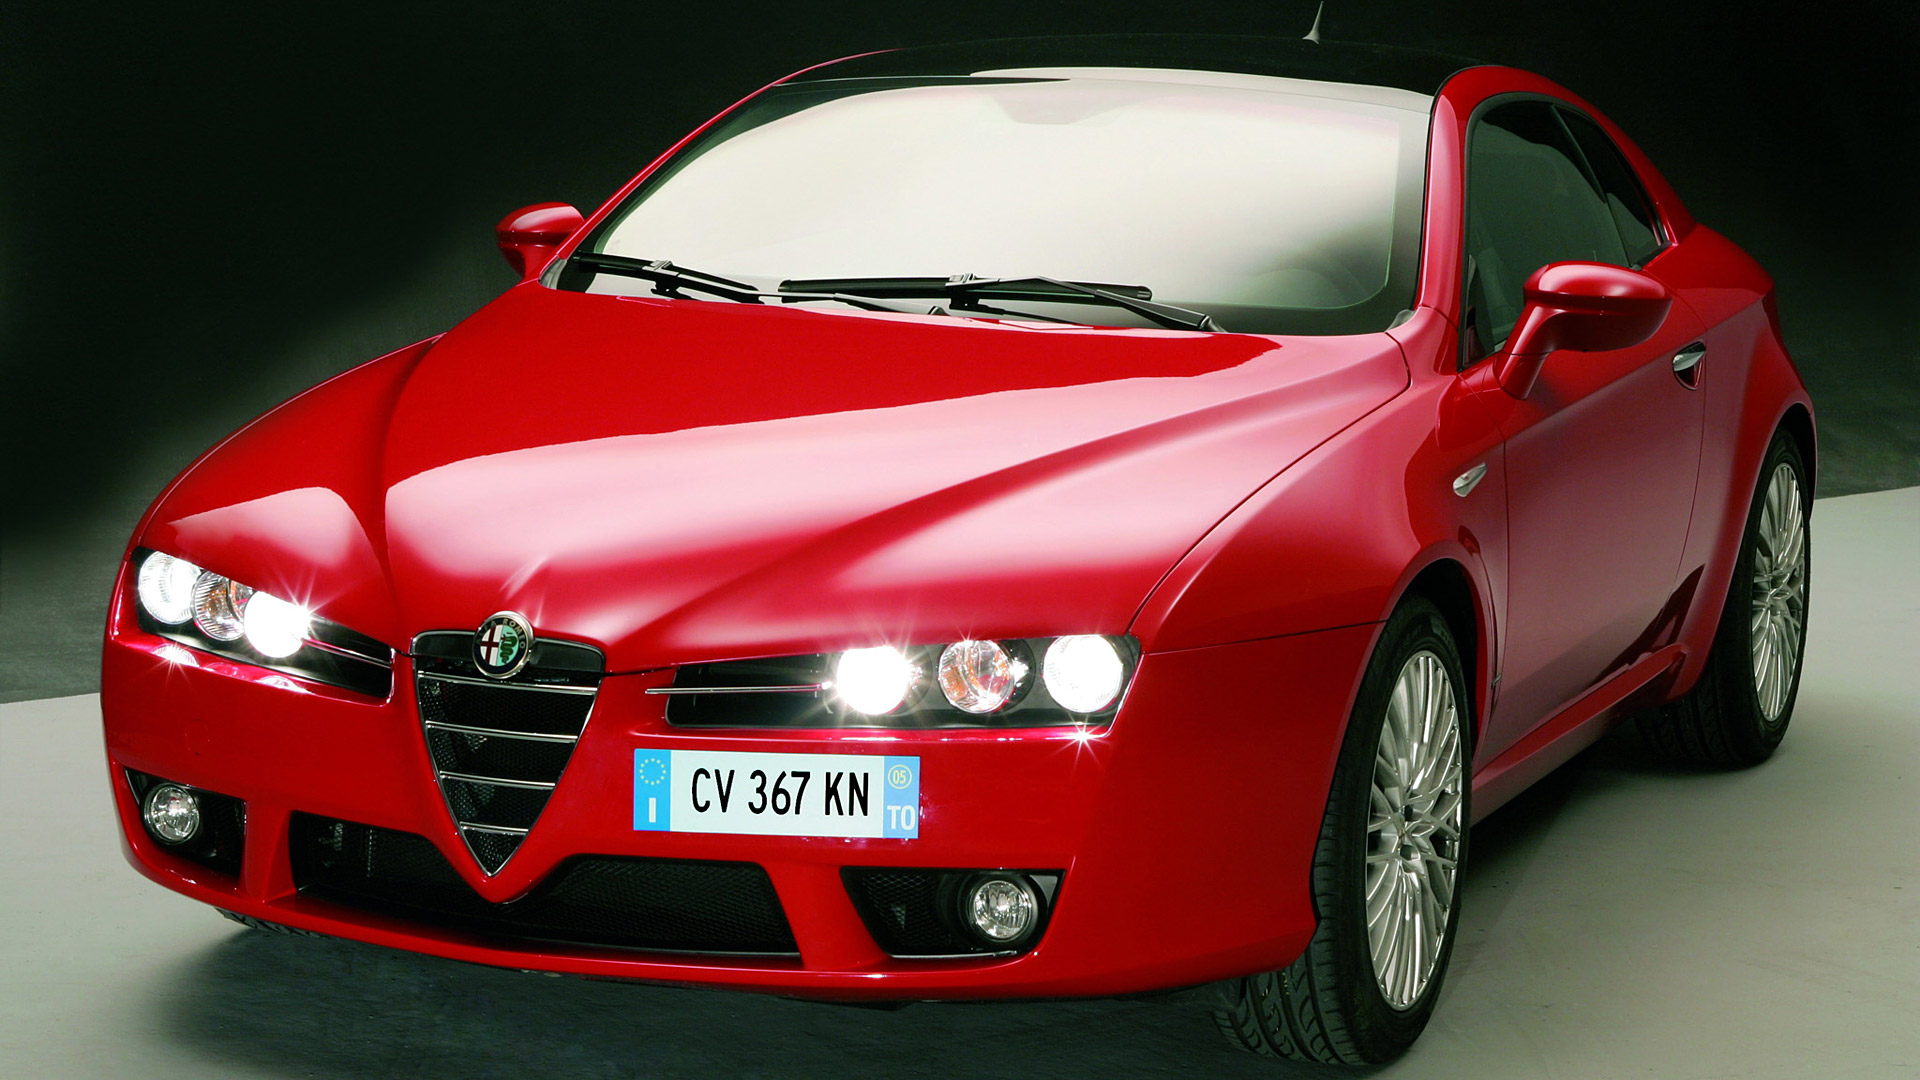  2005 Alfa Romeo Brera Wallpaper.